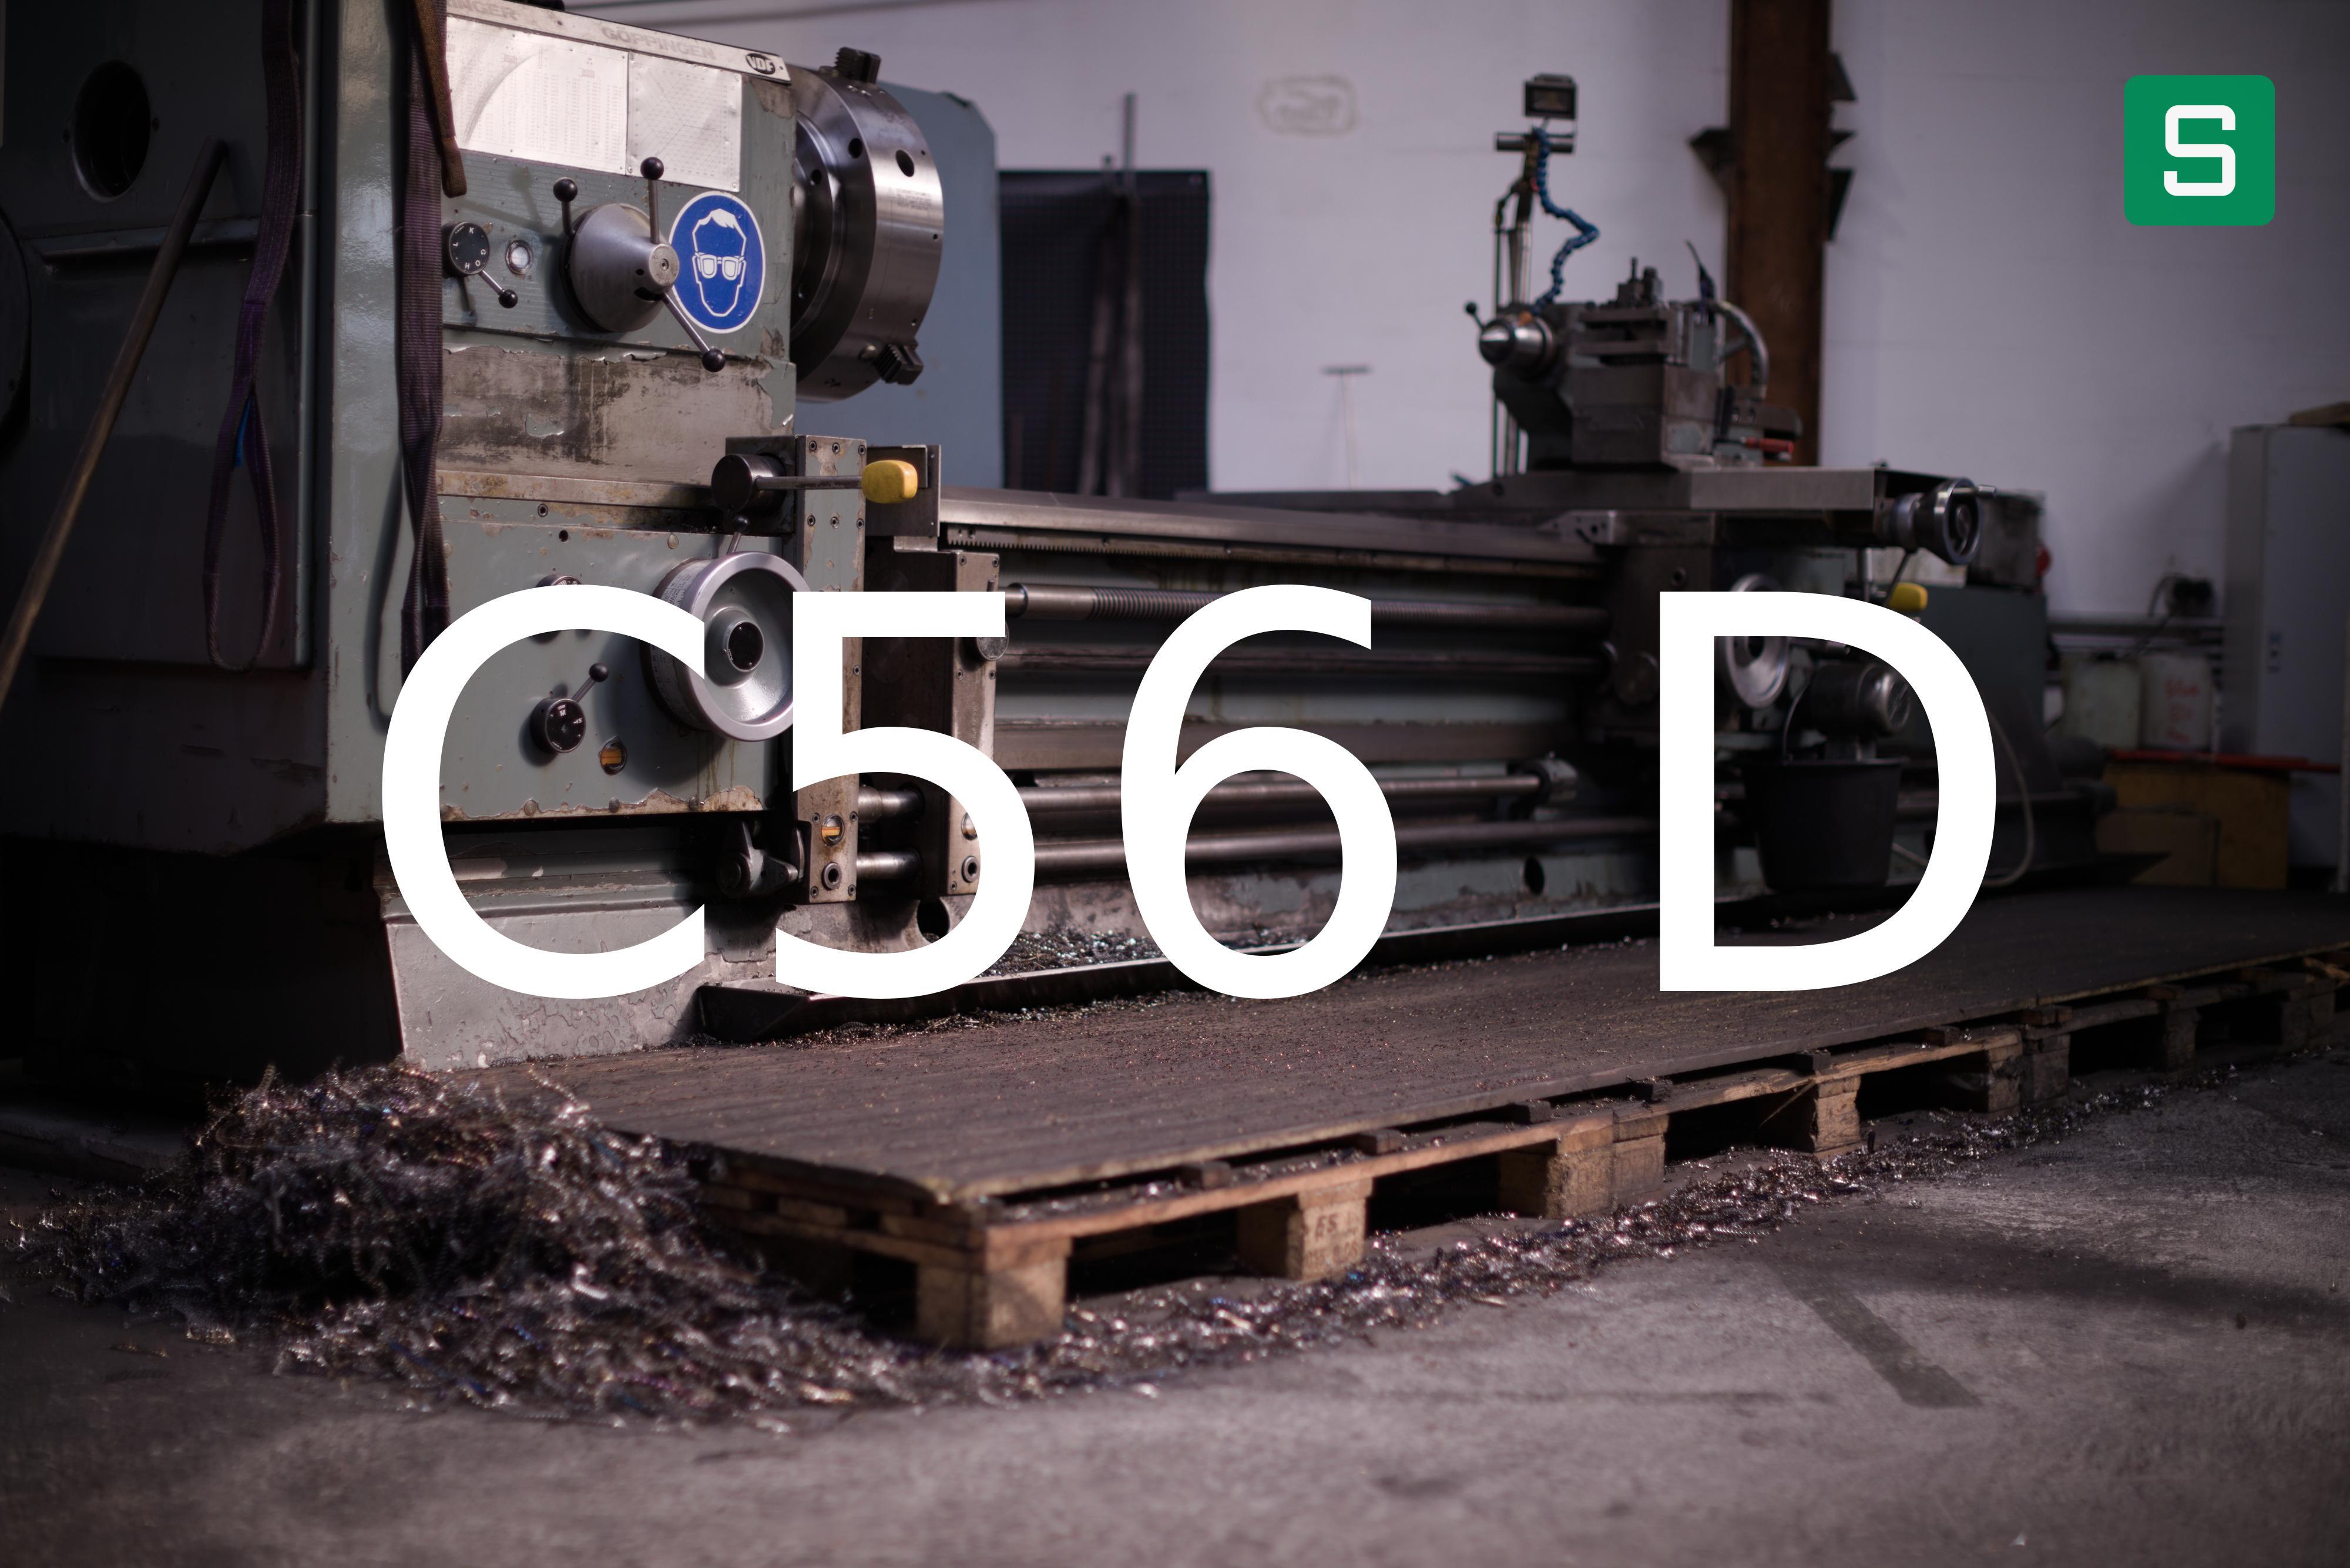 Steel Material: C56 D